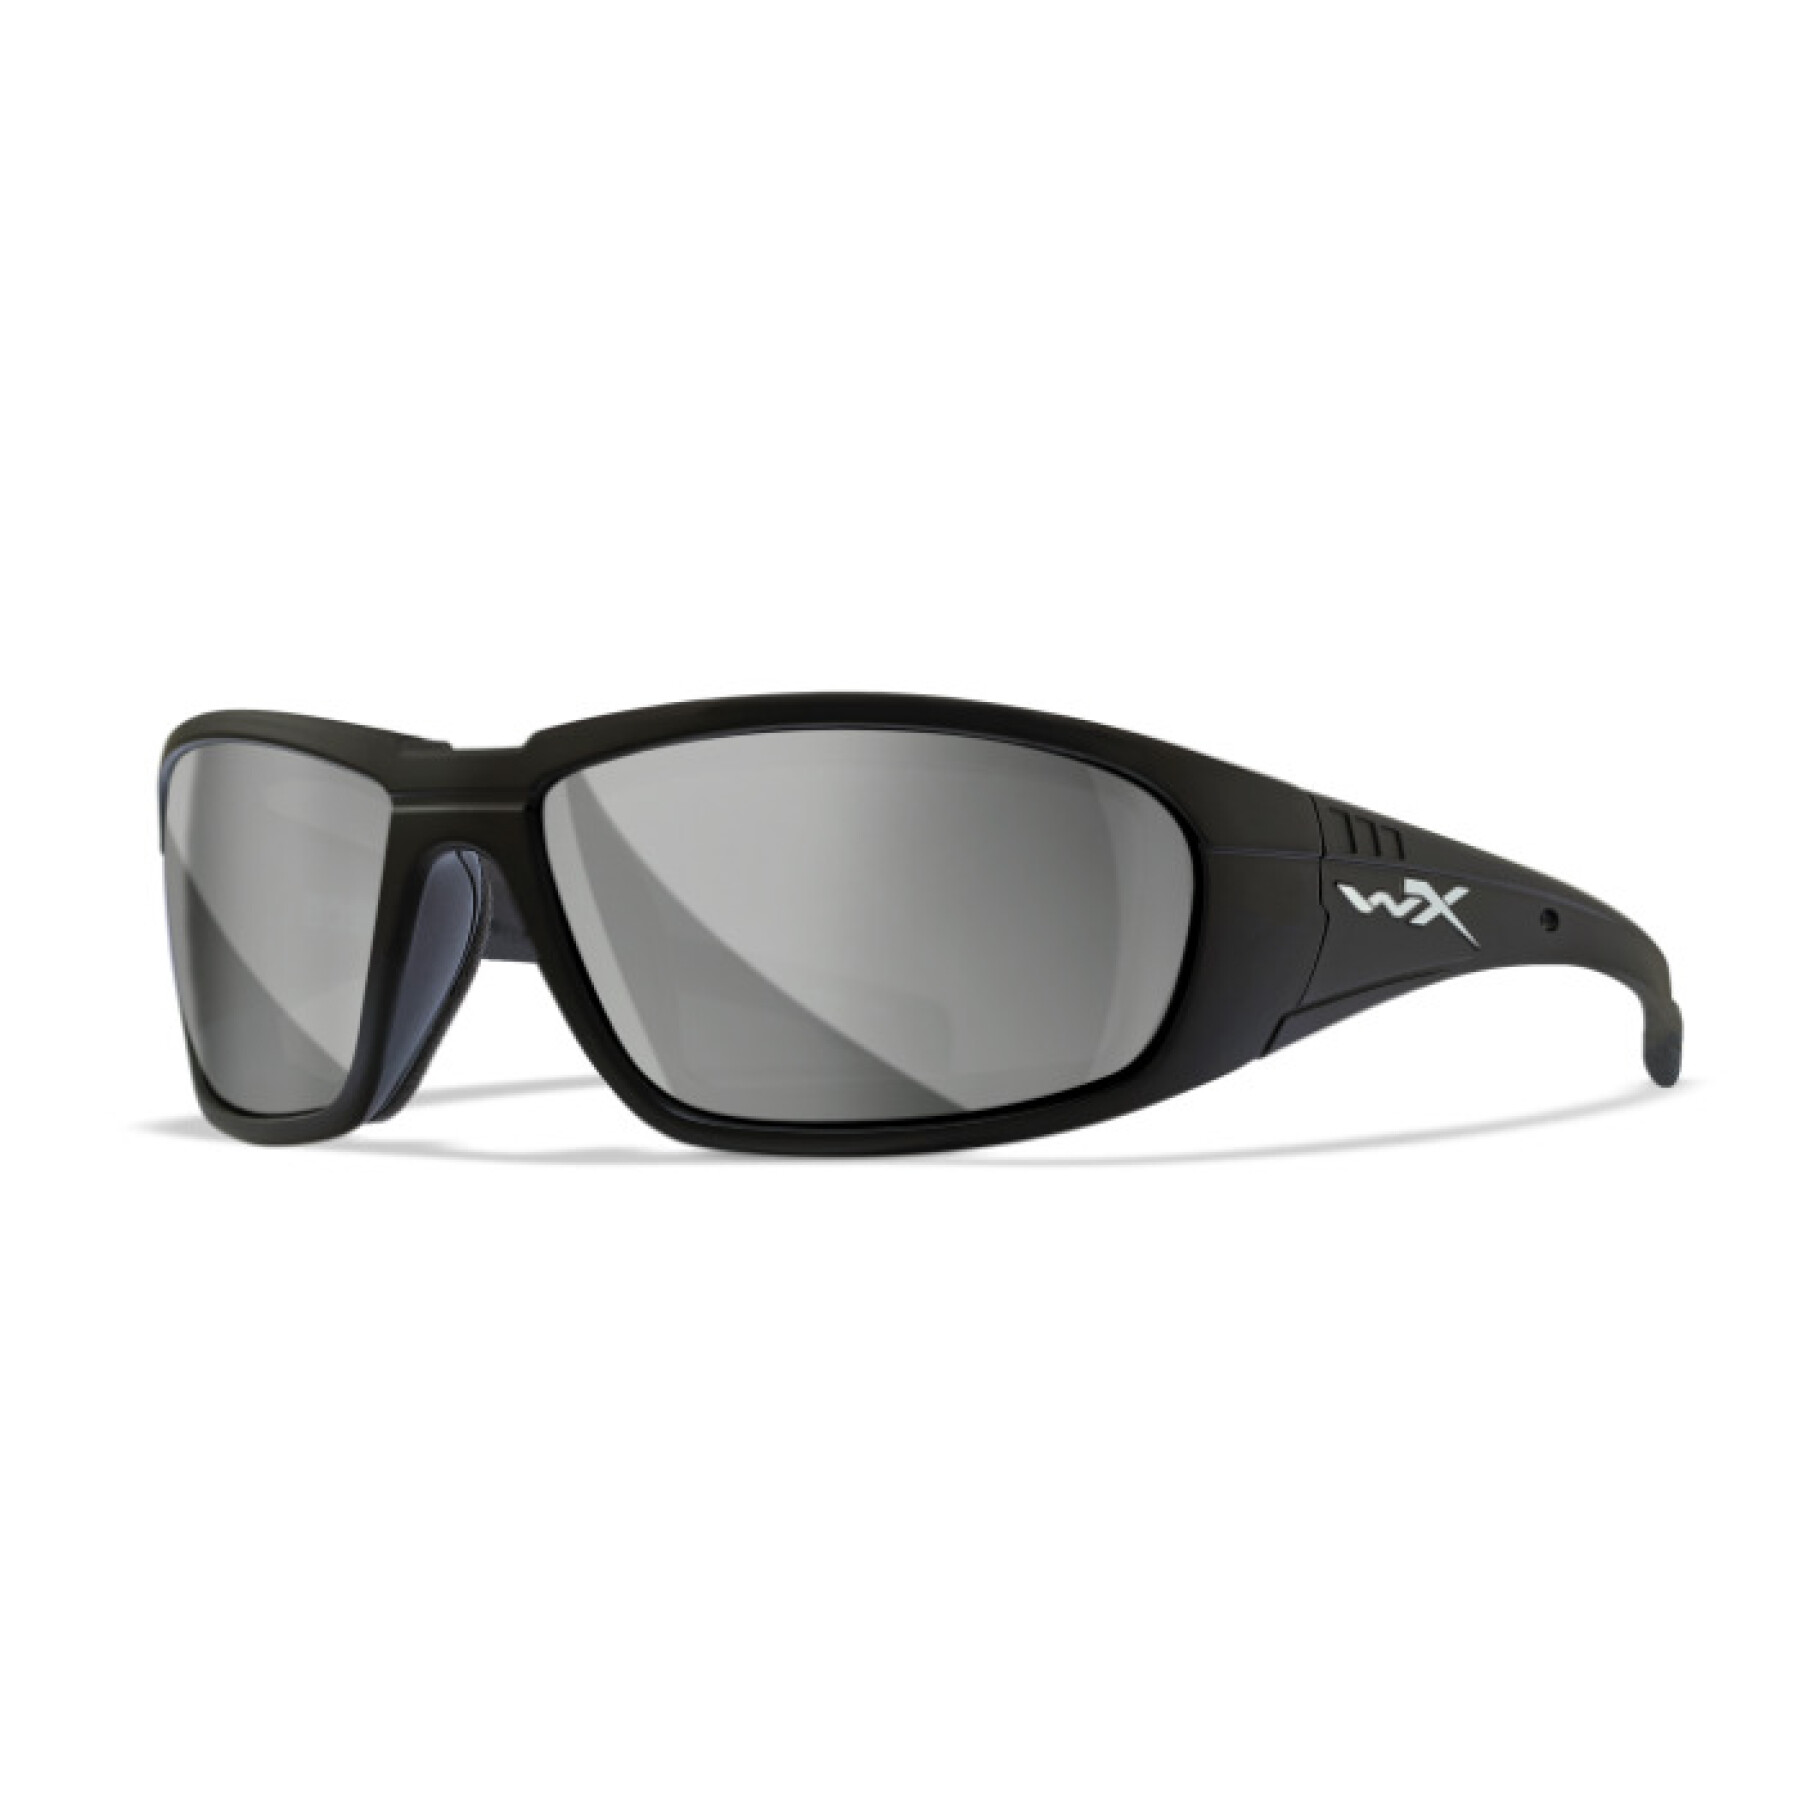 Sunglasses Wiley X